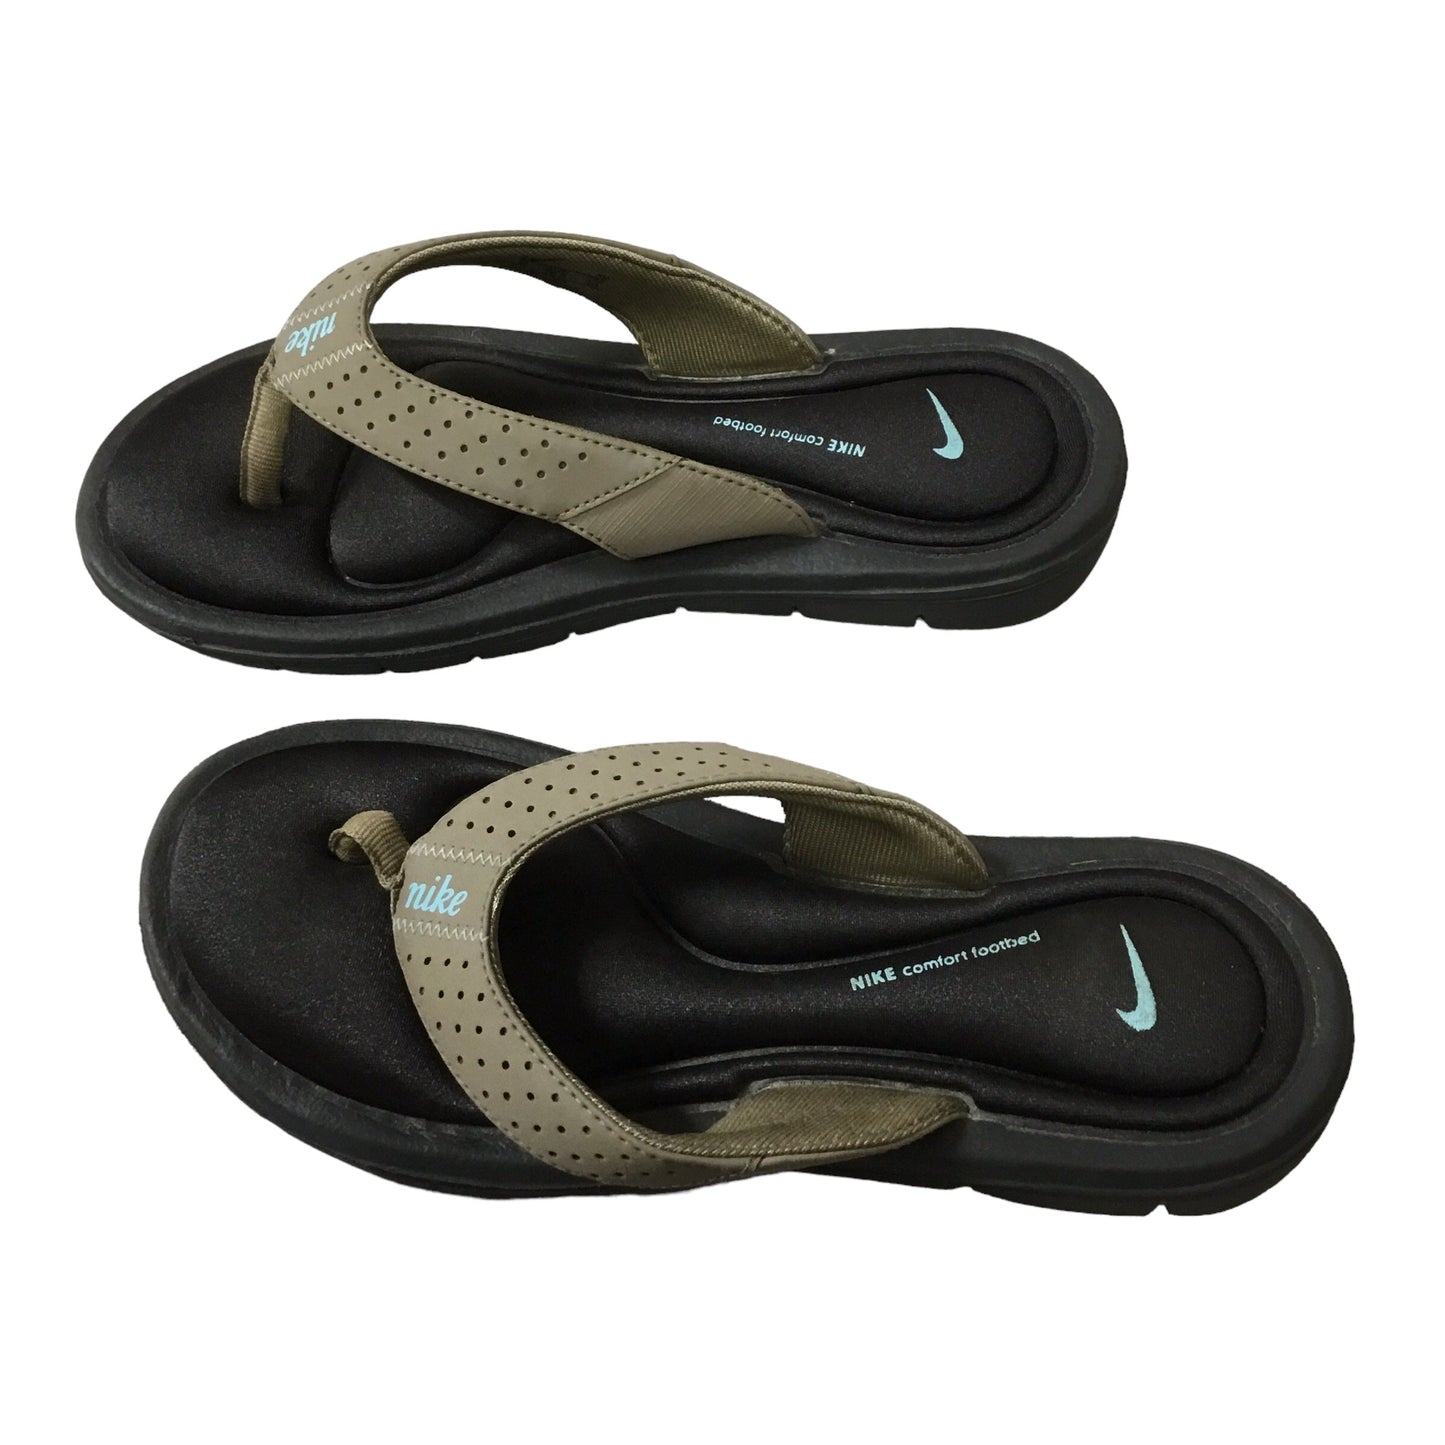 Tan Sandals Flip Flops Nike, Size 6